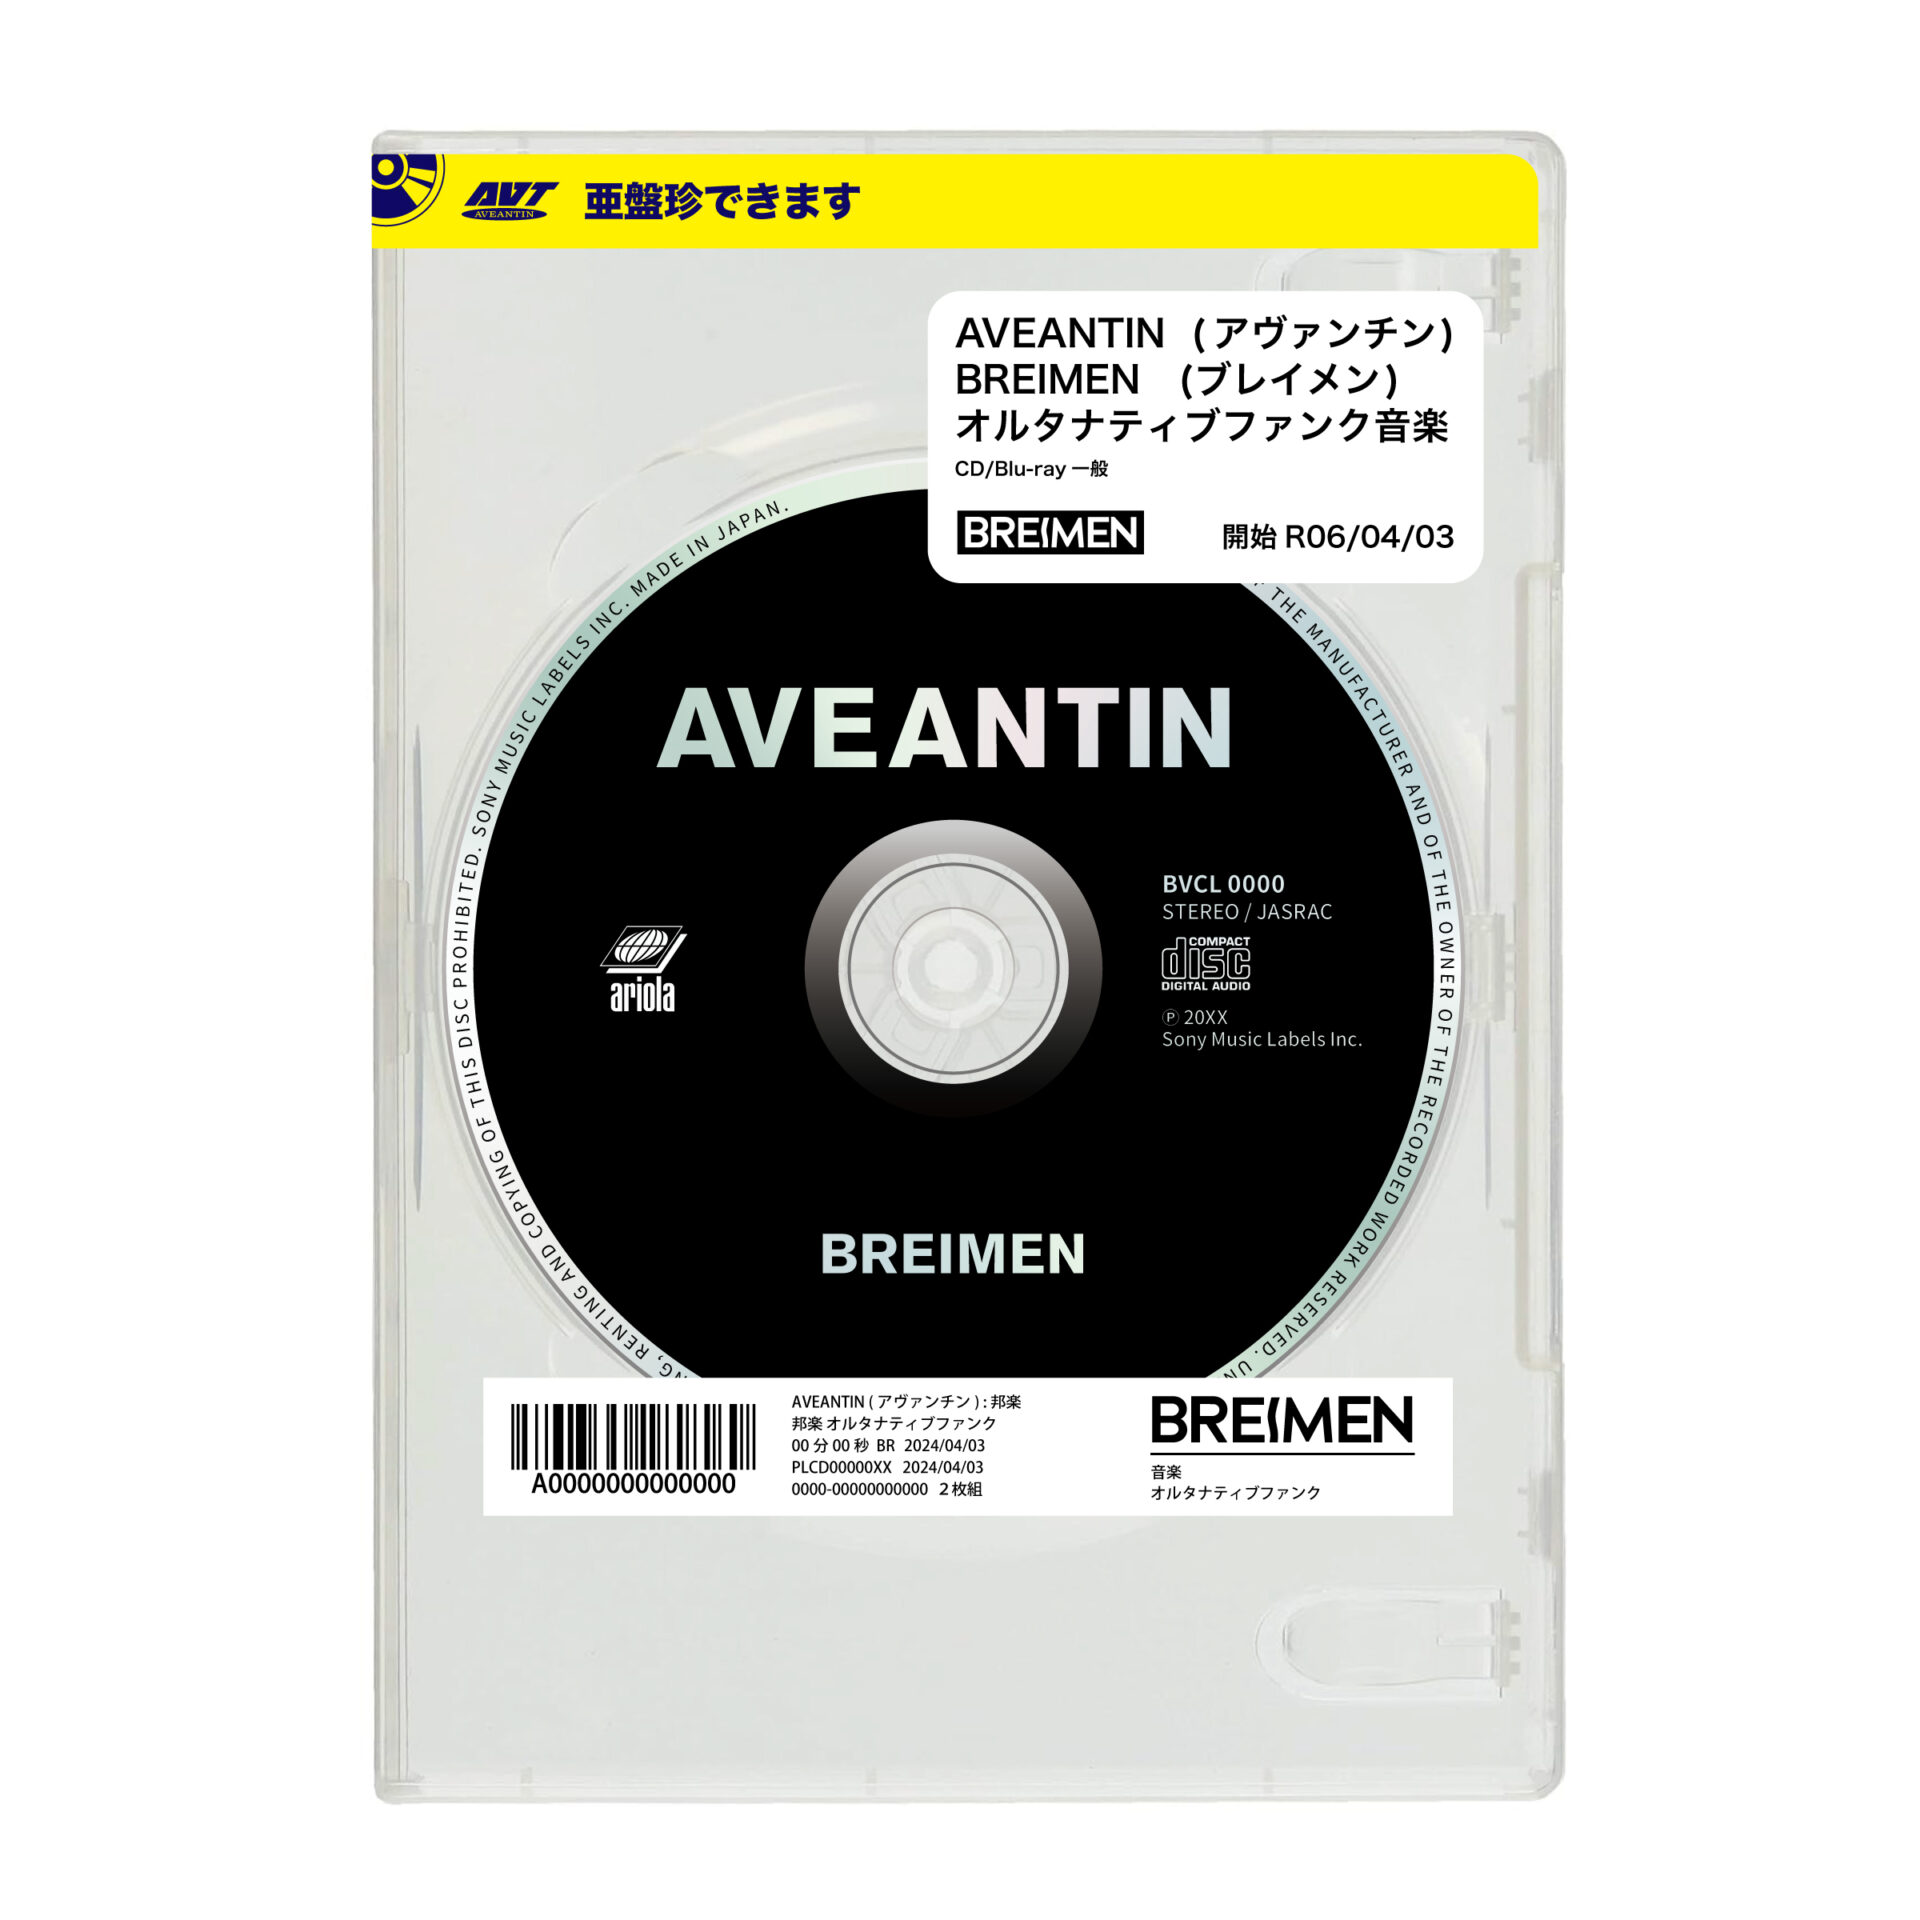 『AVEANTIN』初回生産限定盤ジャケット